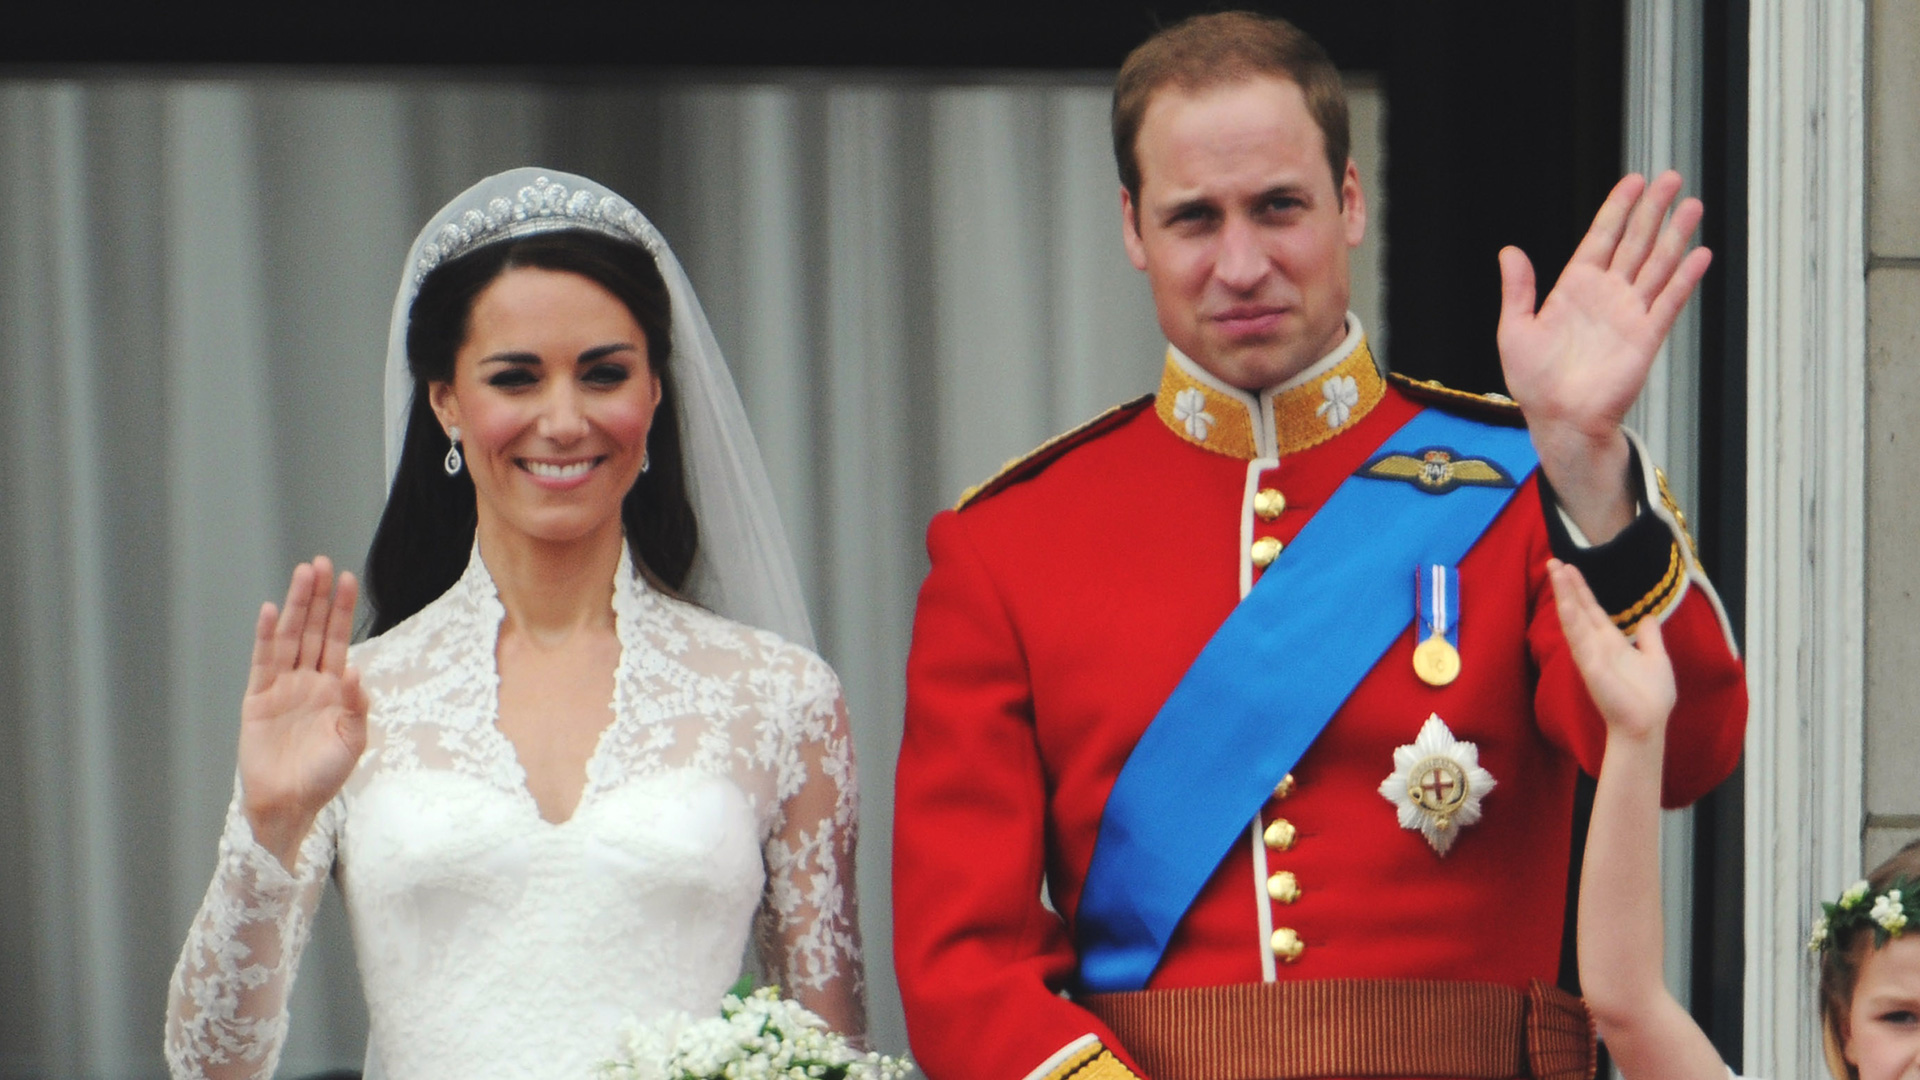 April 29, 2011: Kate Middleton Married Prince William